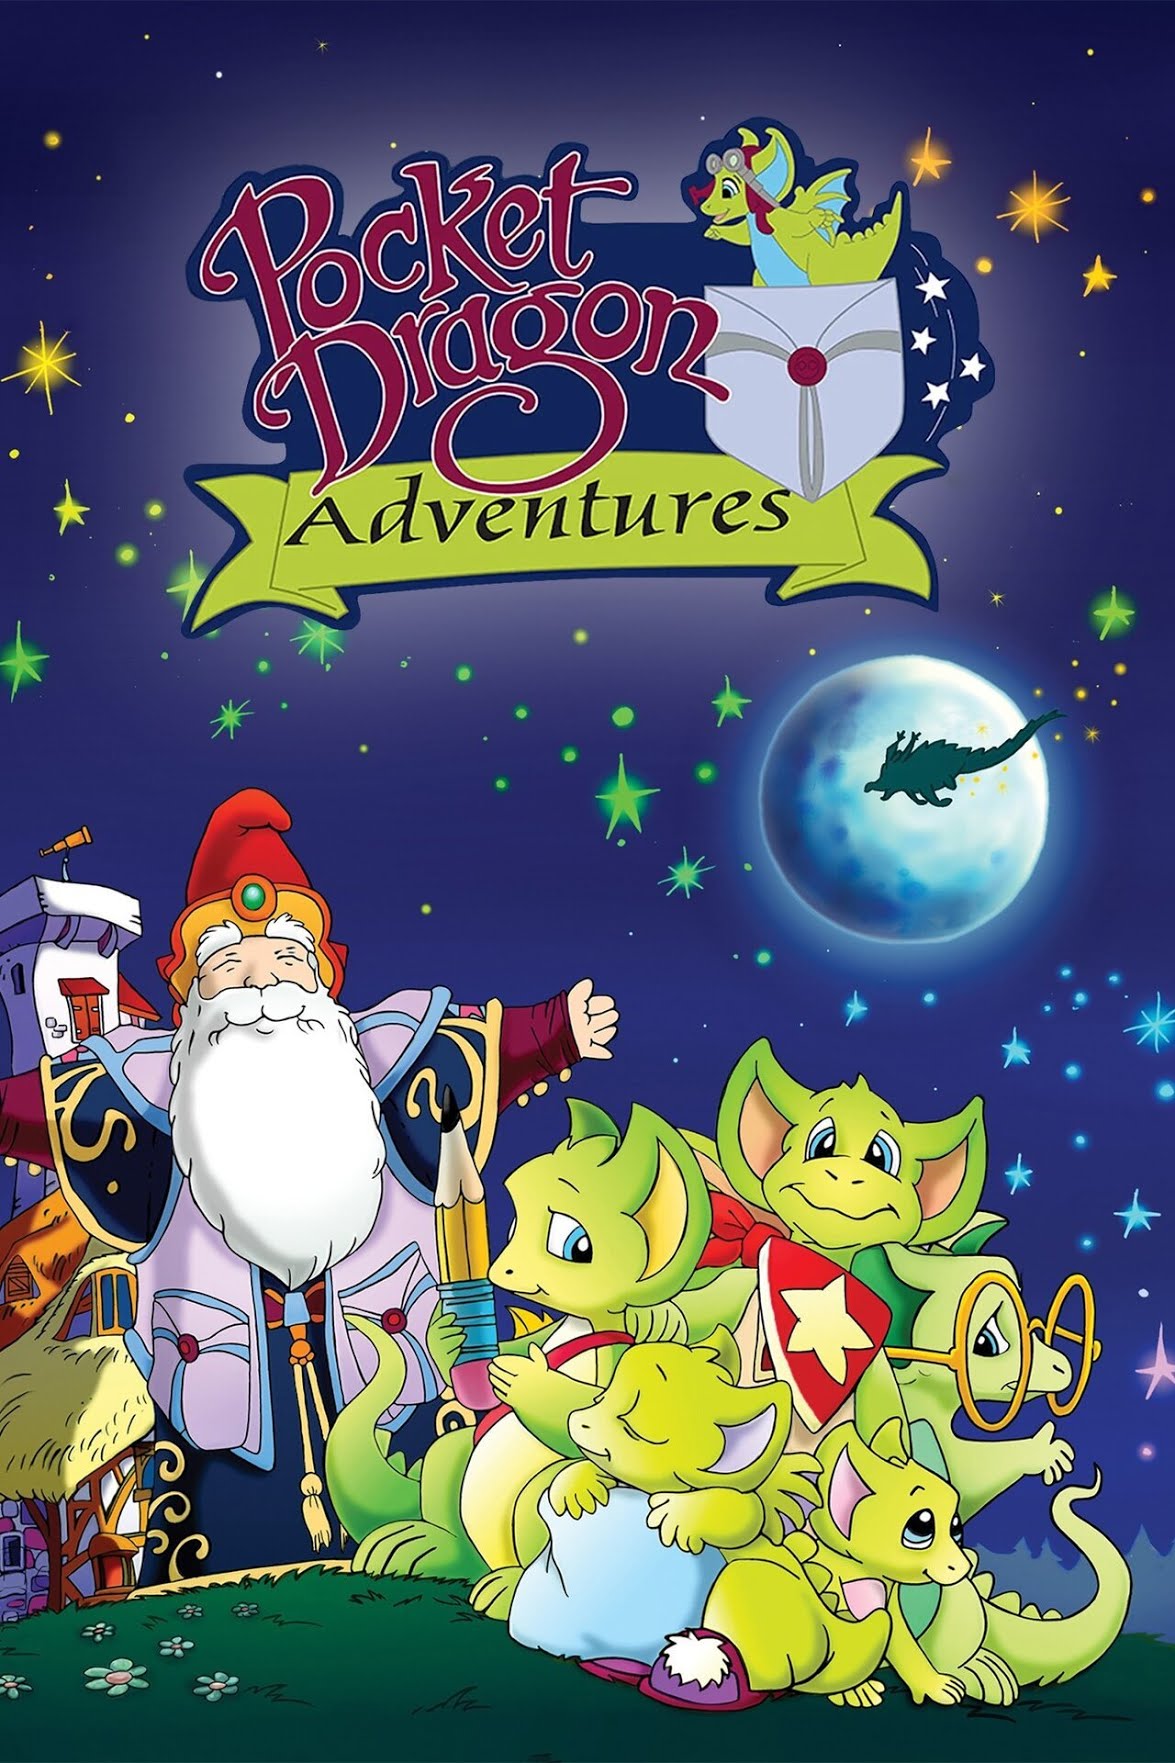 Pocket Dragon Adventures - Wikipedia